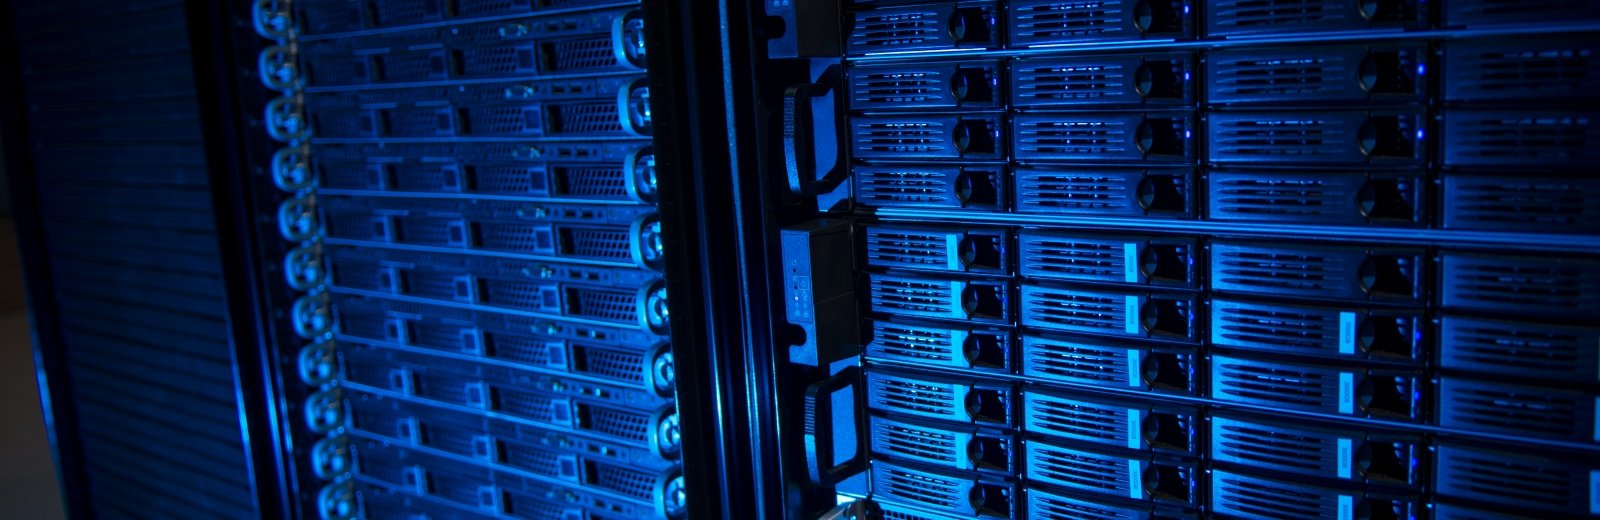 Superior supercomputer server racks in blue lighting